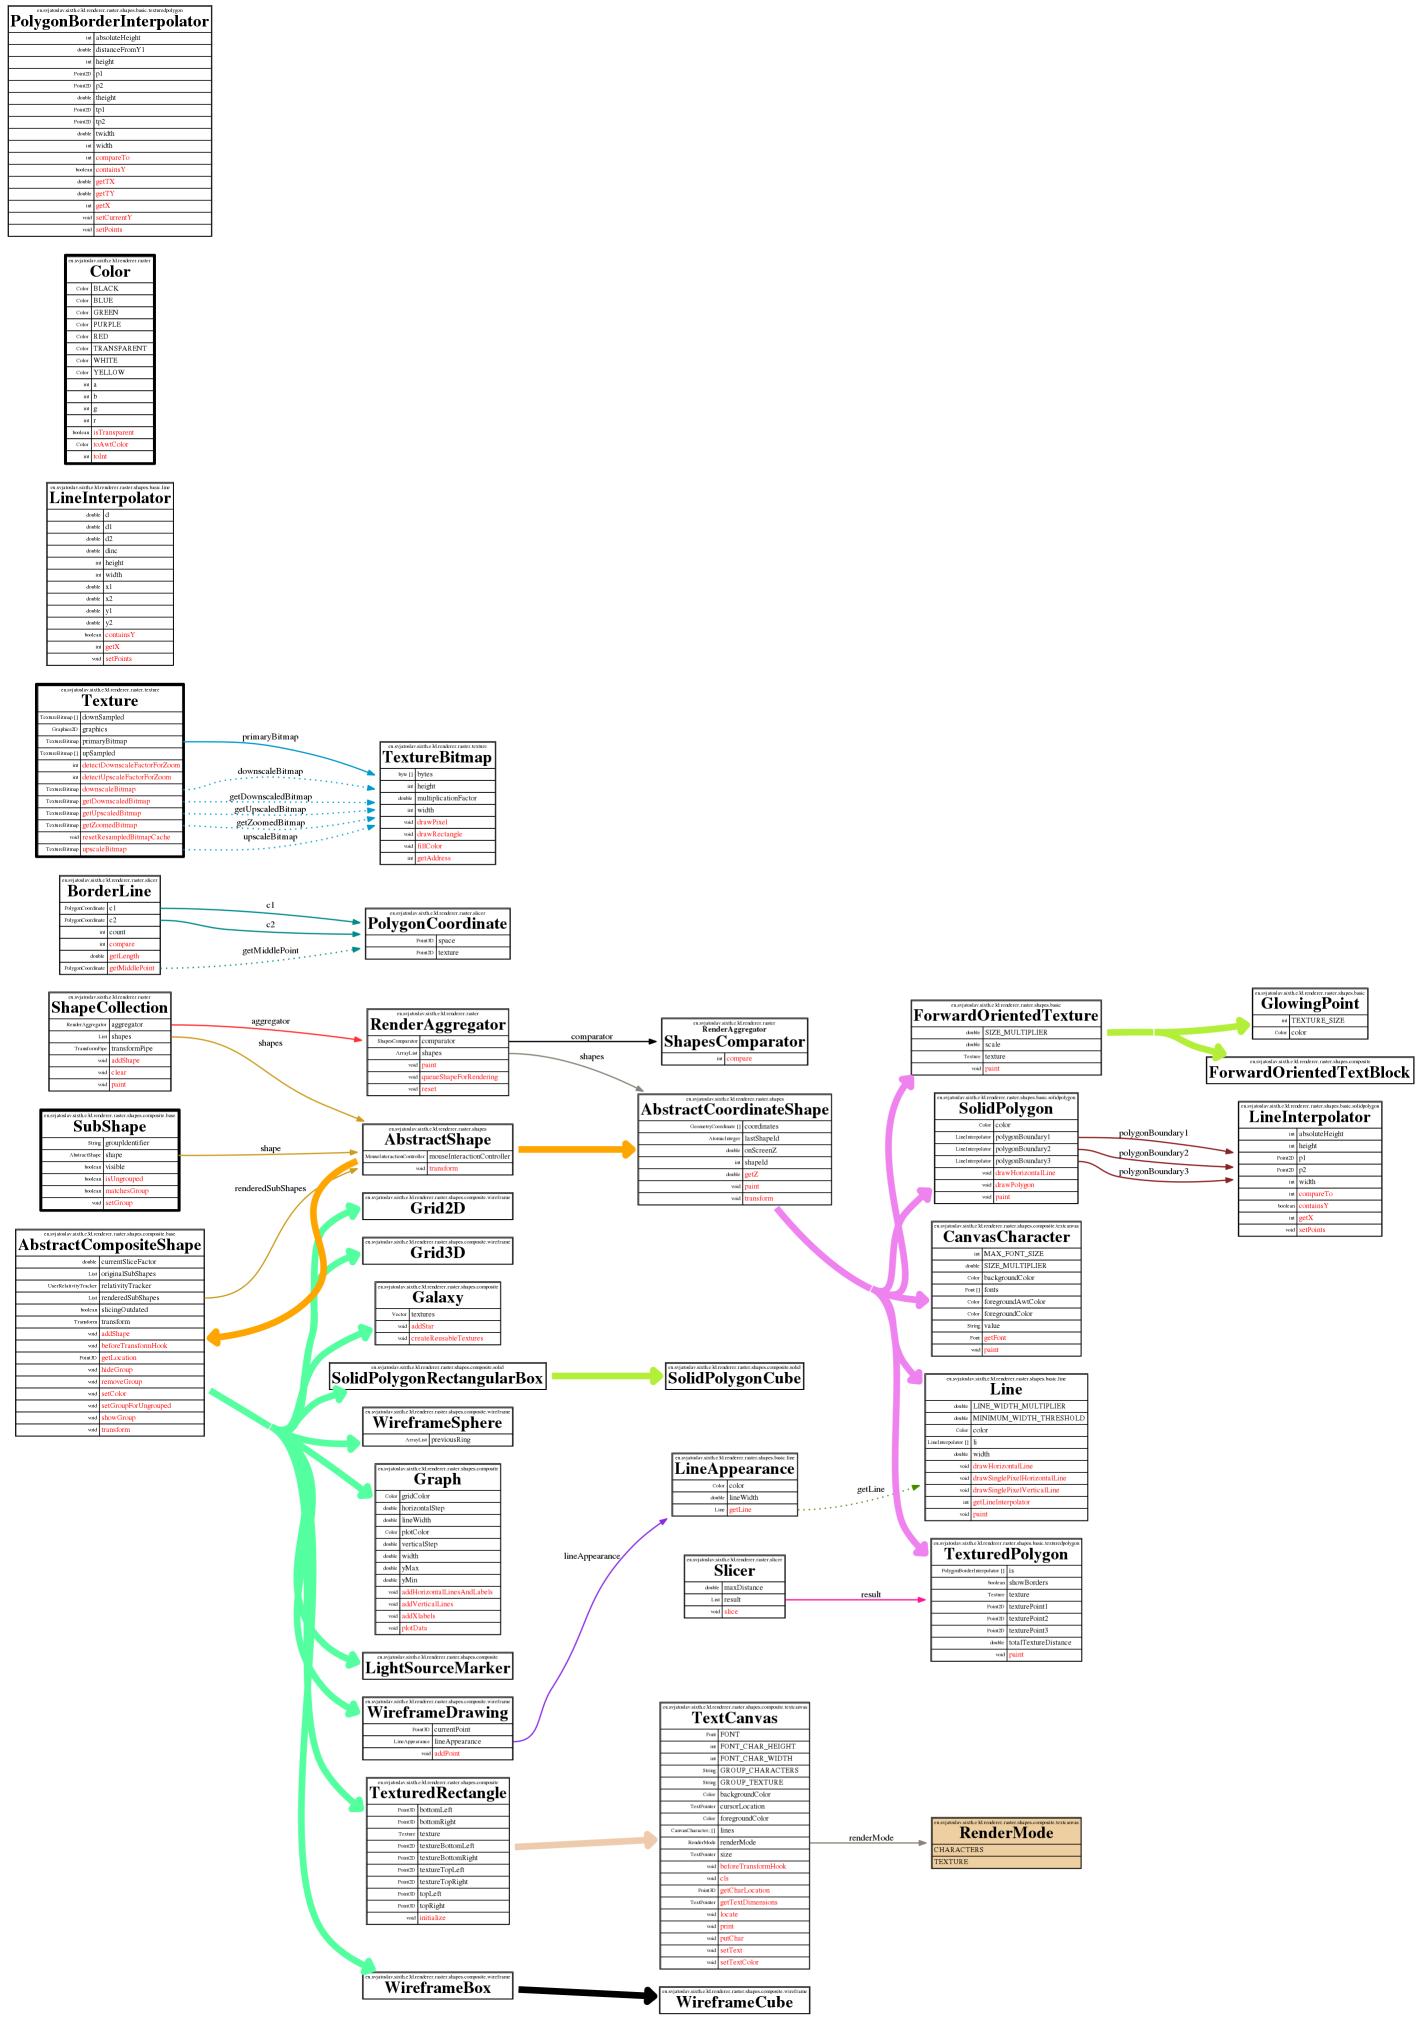 doc/code graph/.thumbnails/raster engine (7A403C30).jpeg